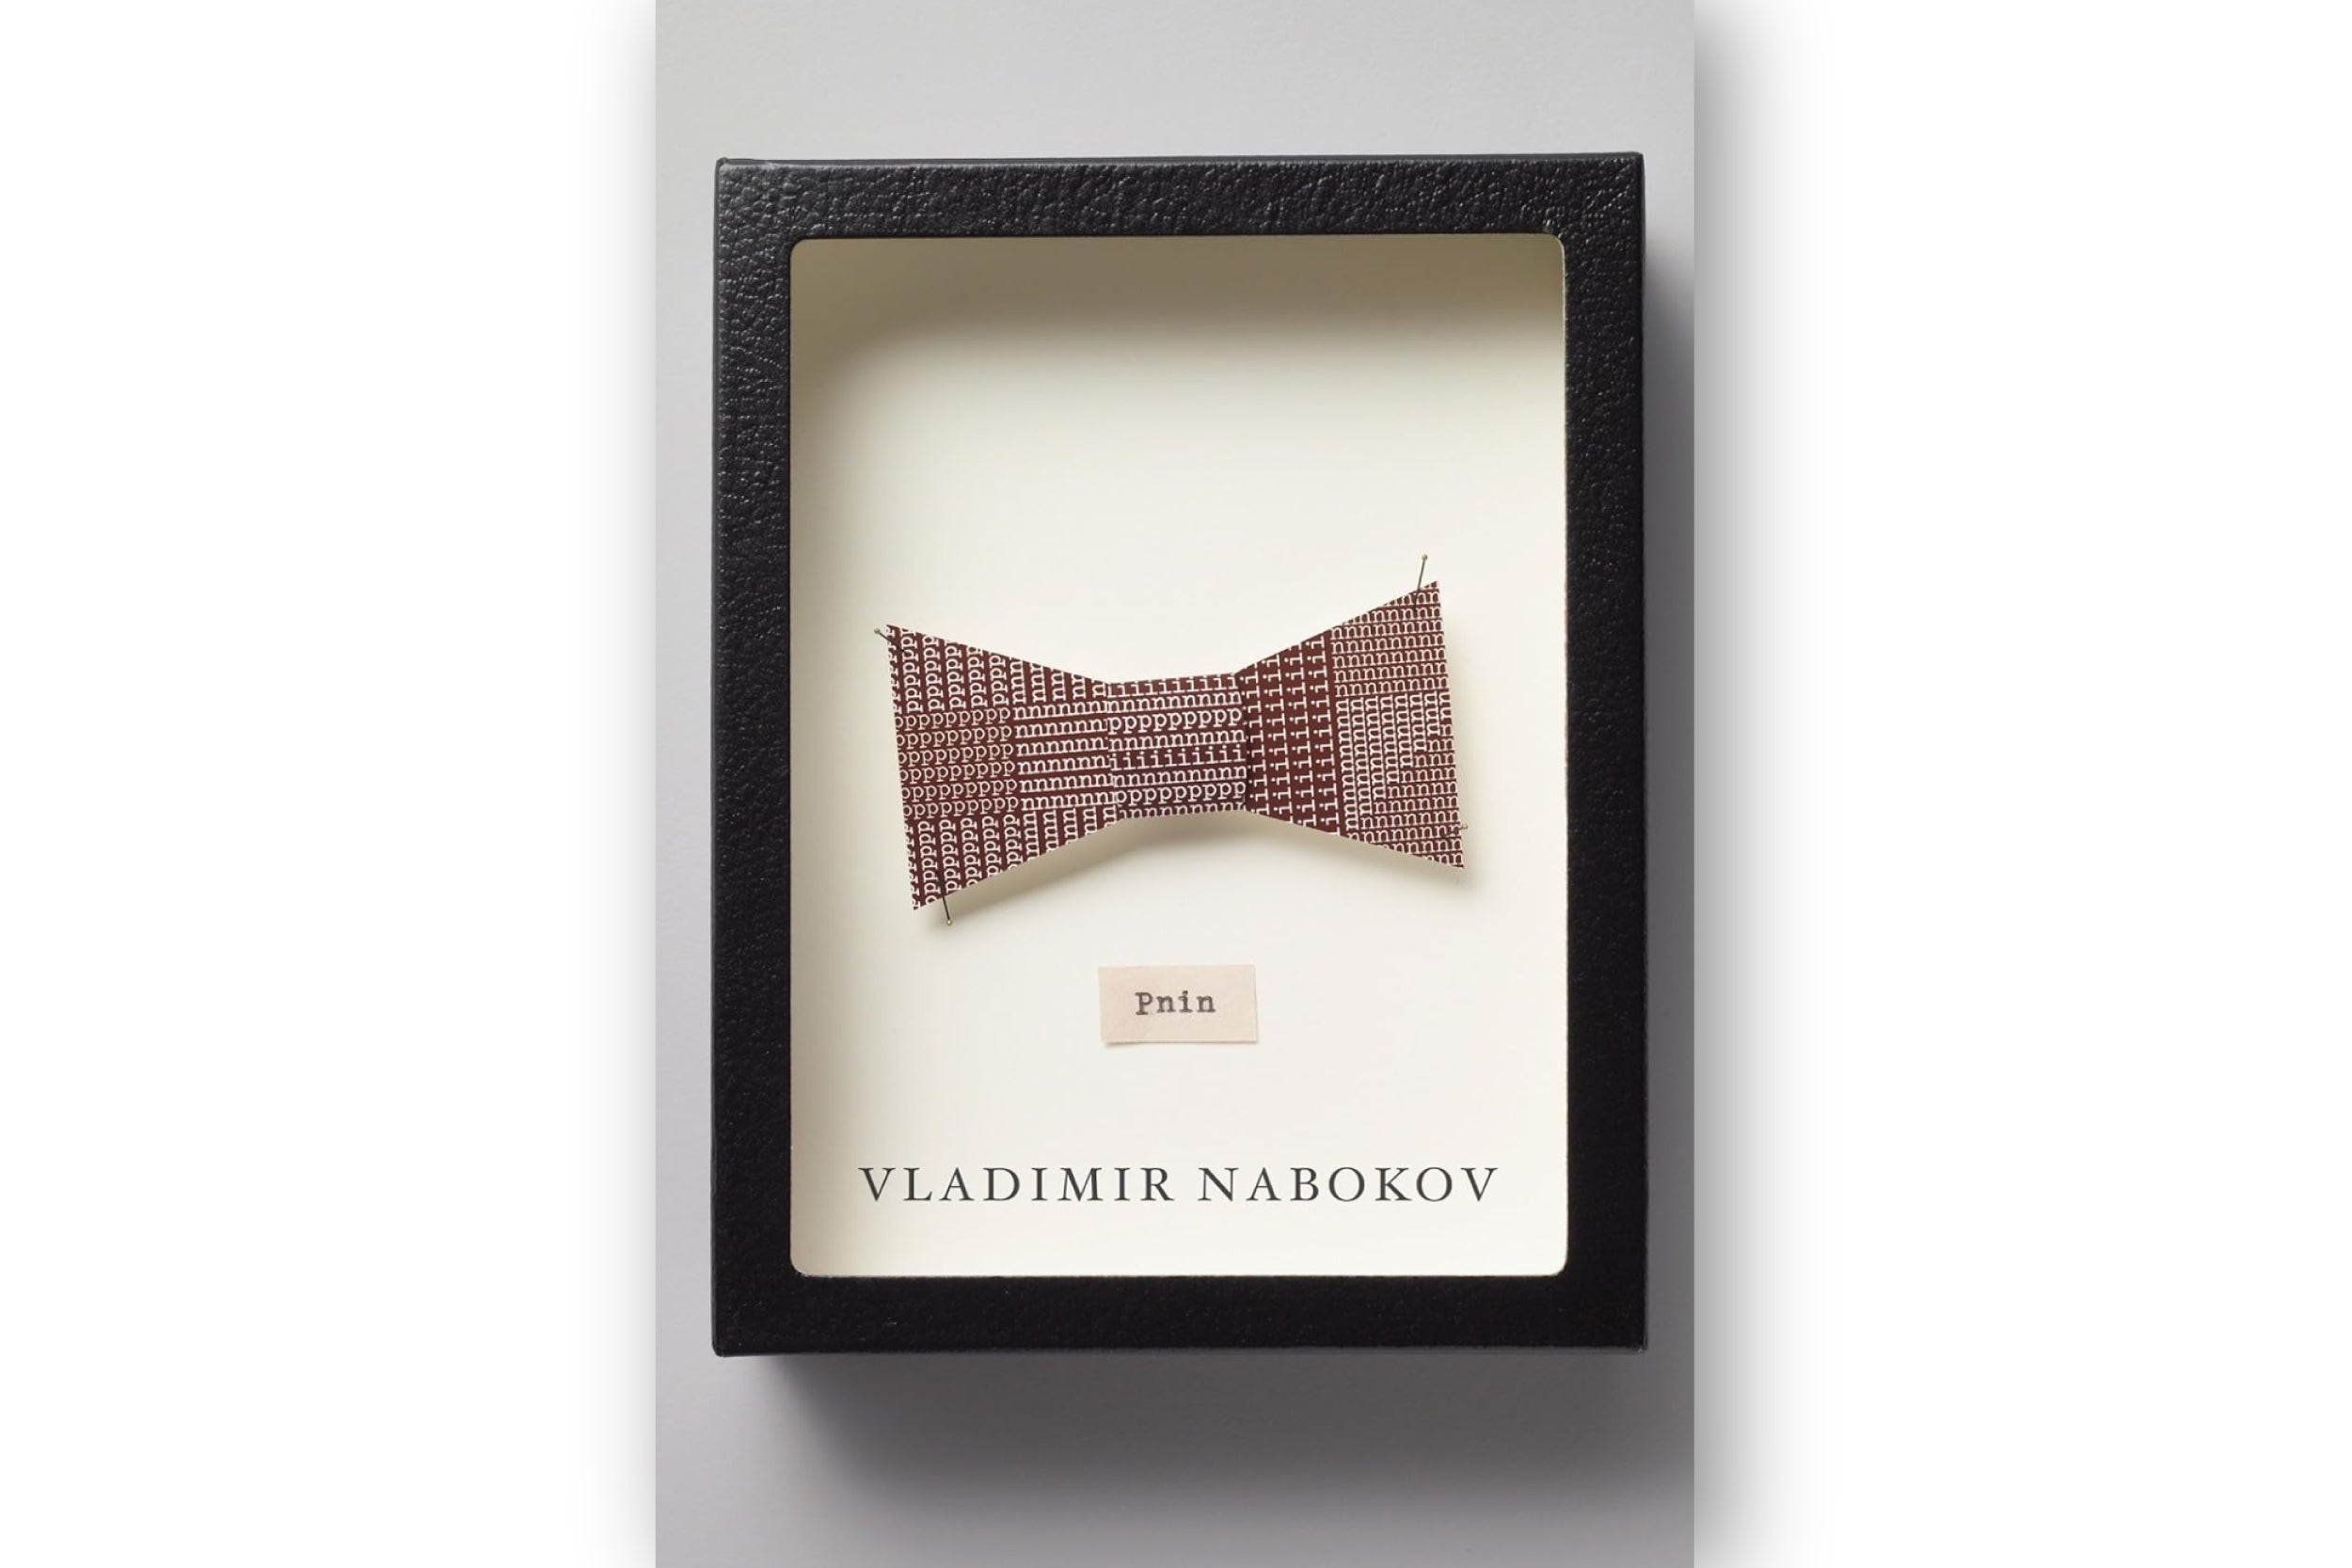 Kitap kapağı: Pnin Vladimir Nabokov'un yazısı.